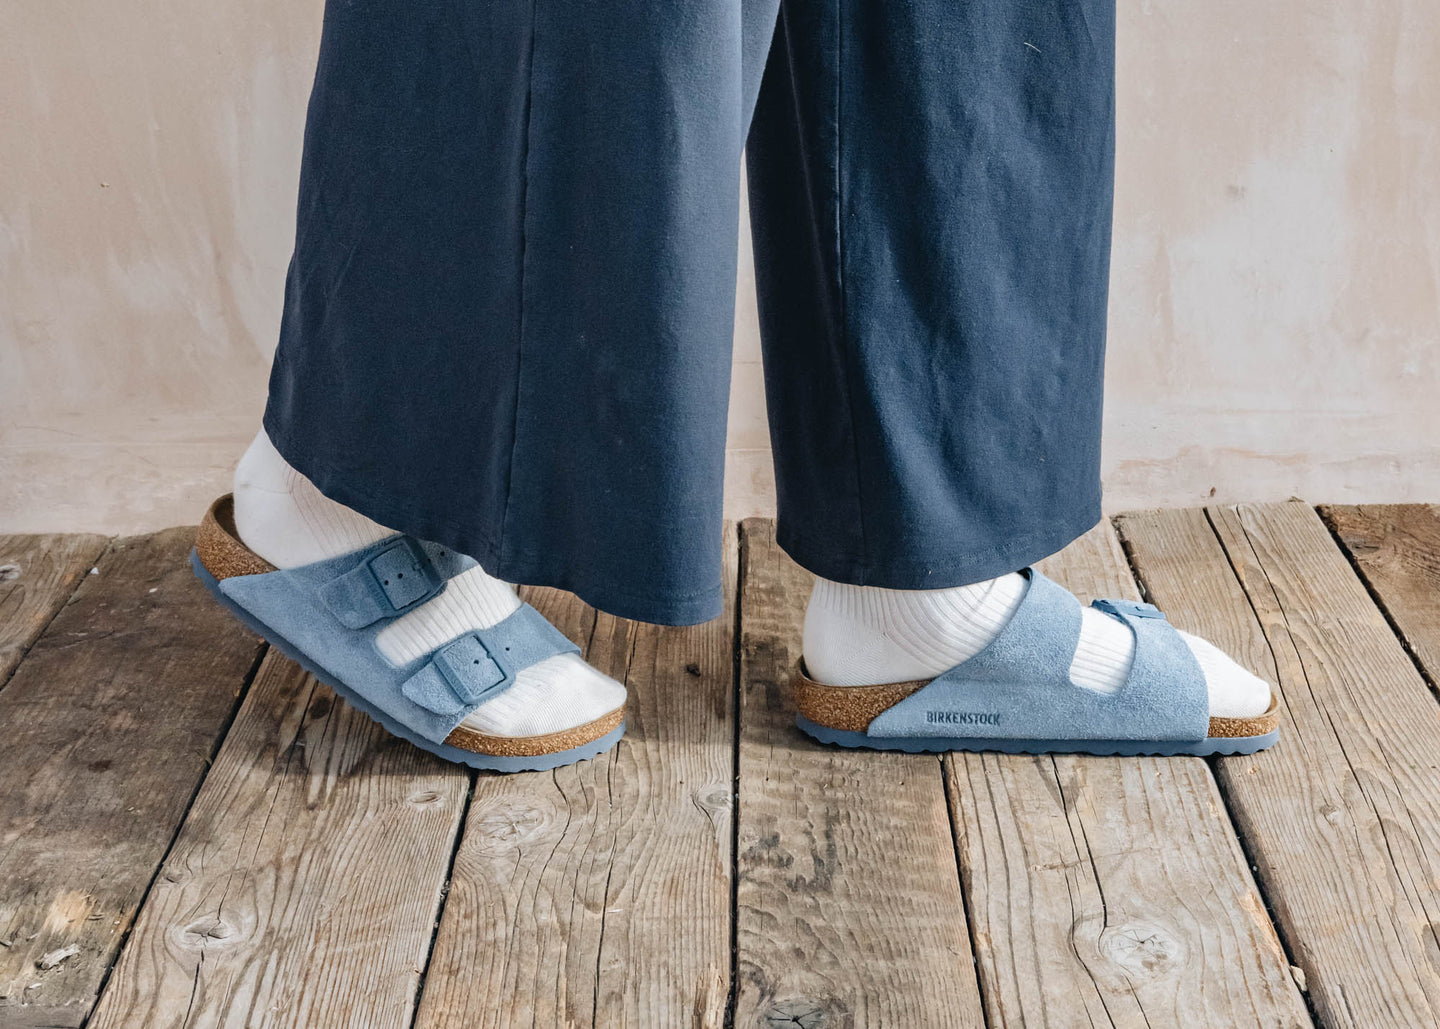 Women's Birkenstock Arizona Suede Narrow Sandals in Elemental Blue